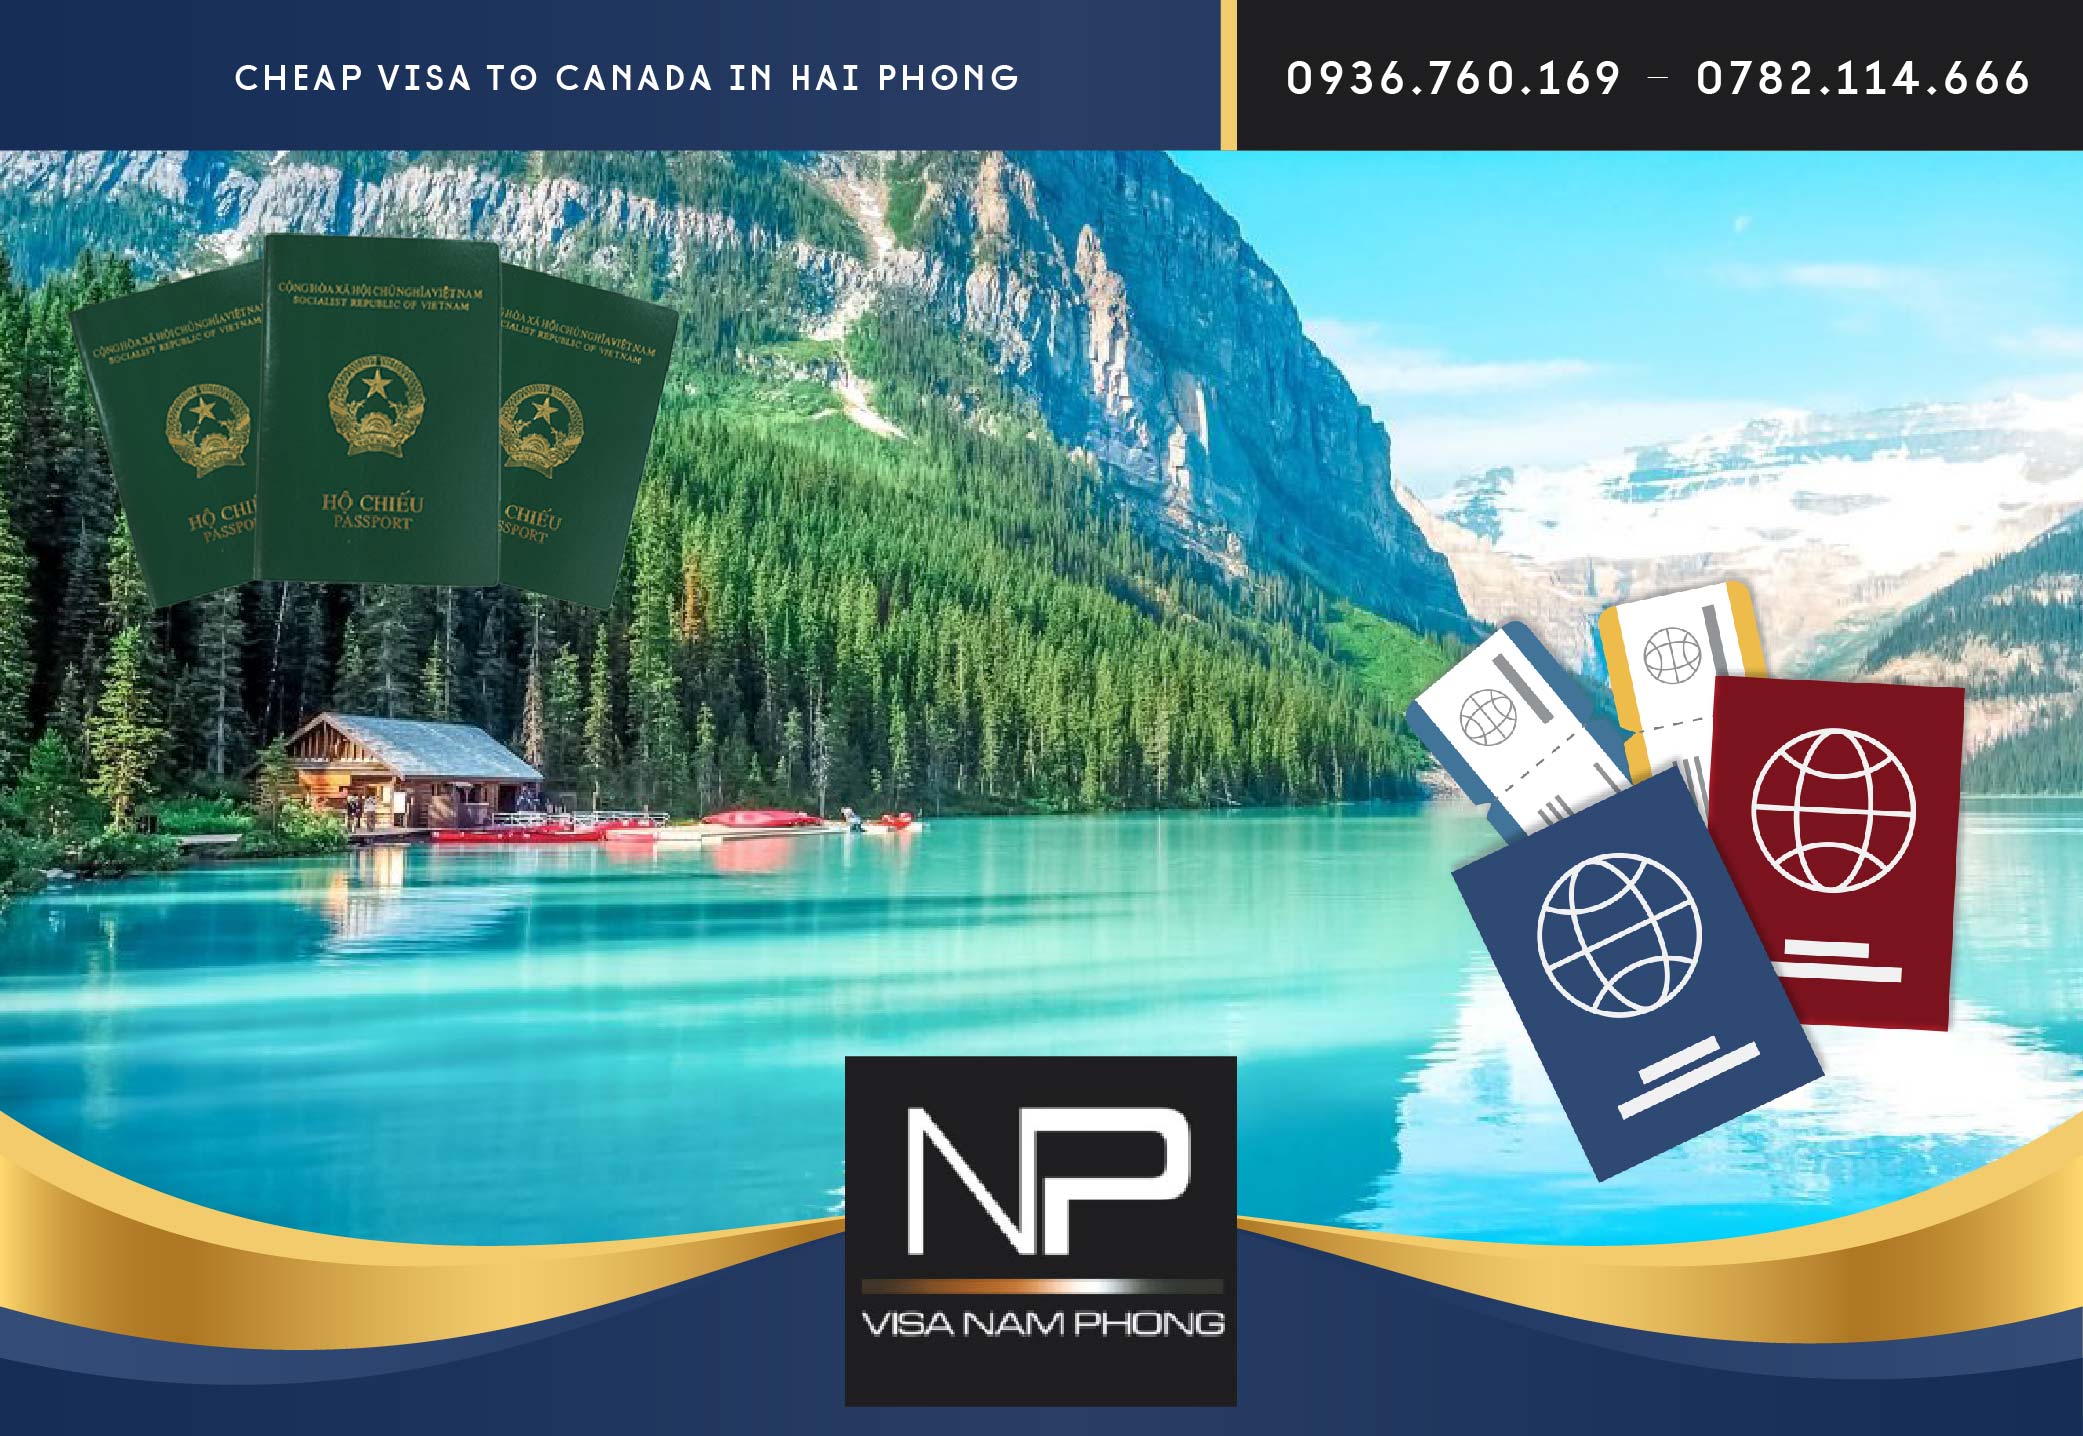 Cheap visa to Canada in Hai Phong